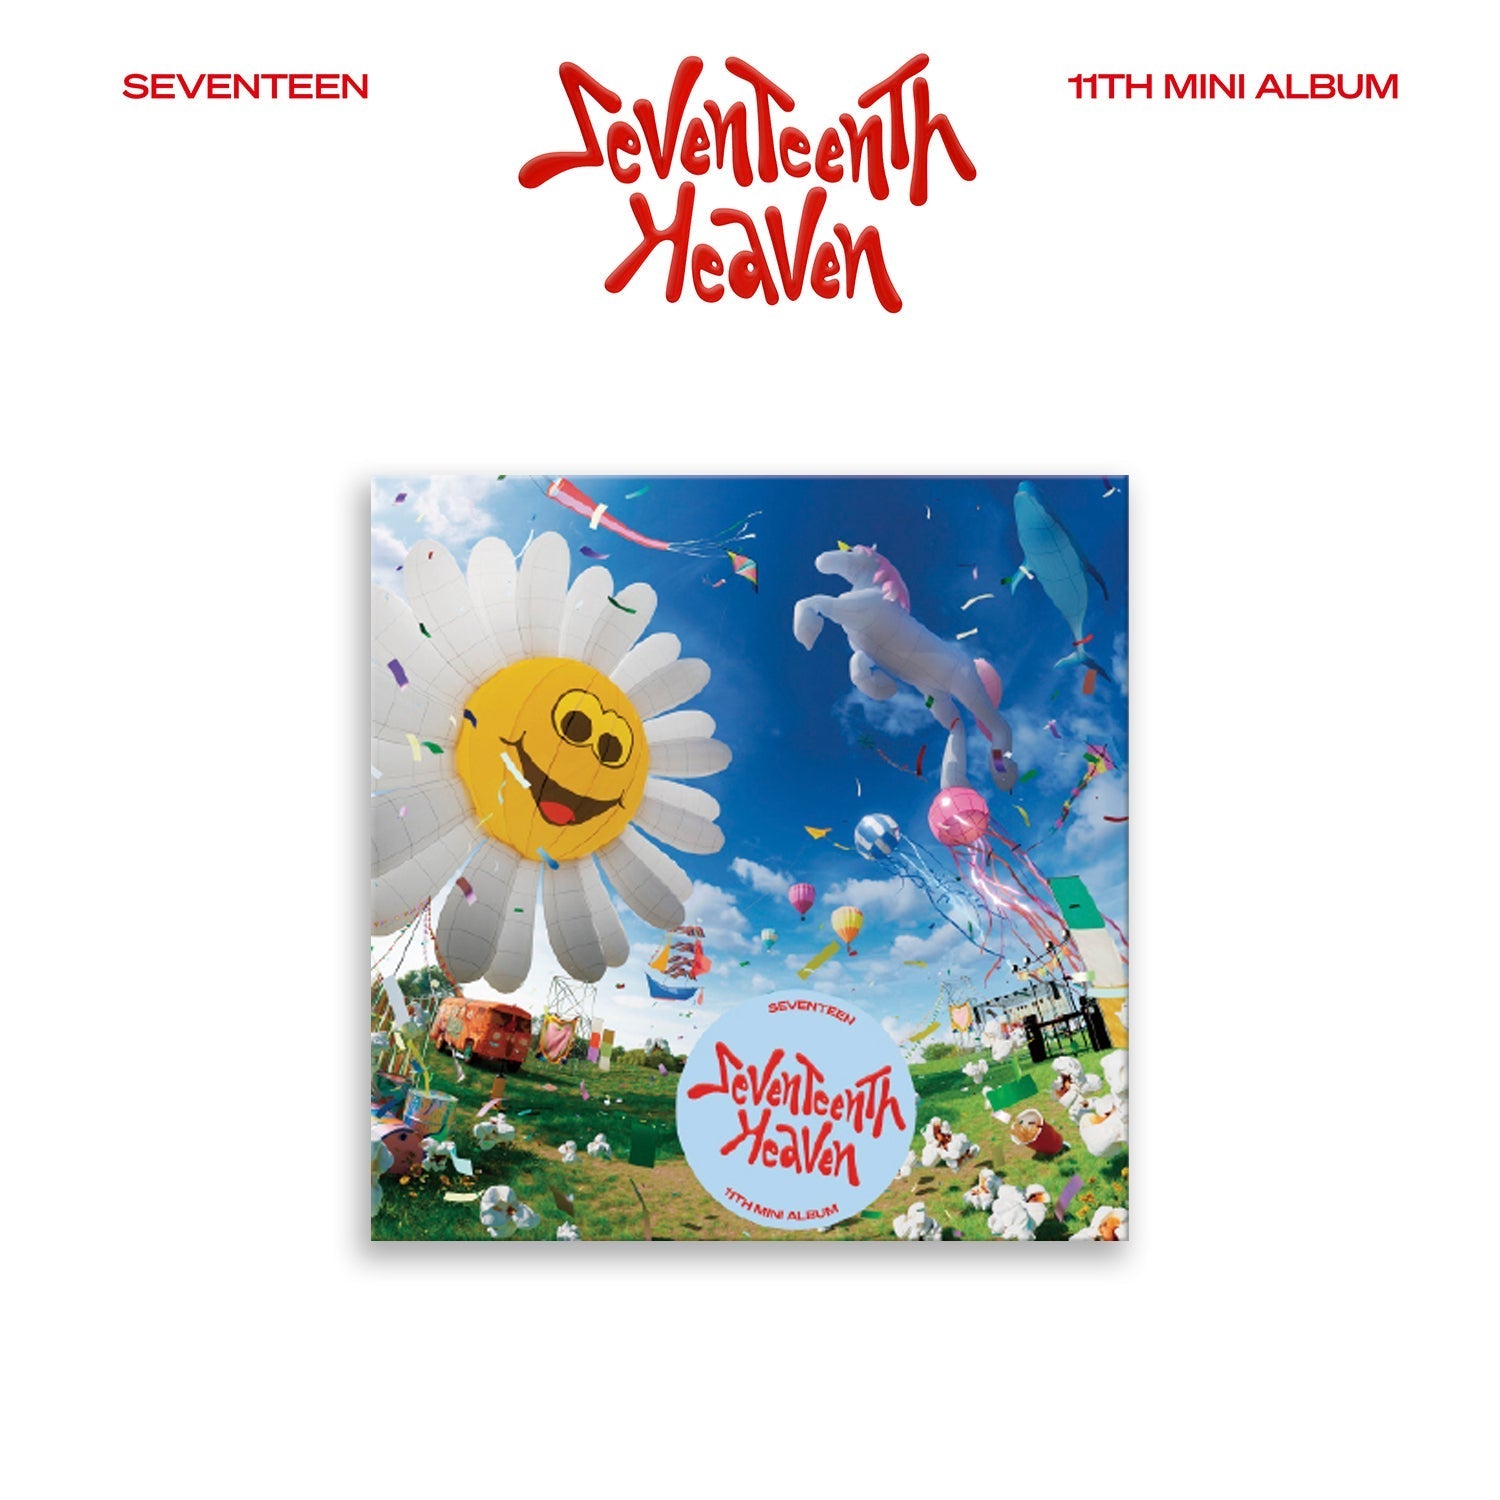 SEVENTEEN - [SEVENTEENTH HEAVEN] 11th Mini Album PM 2:14 Version